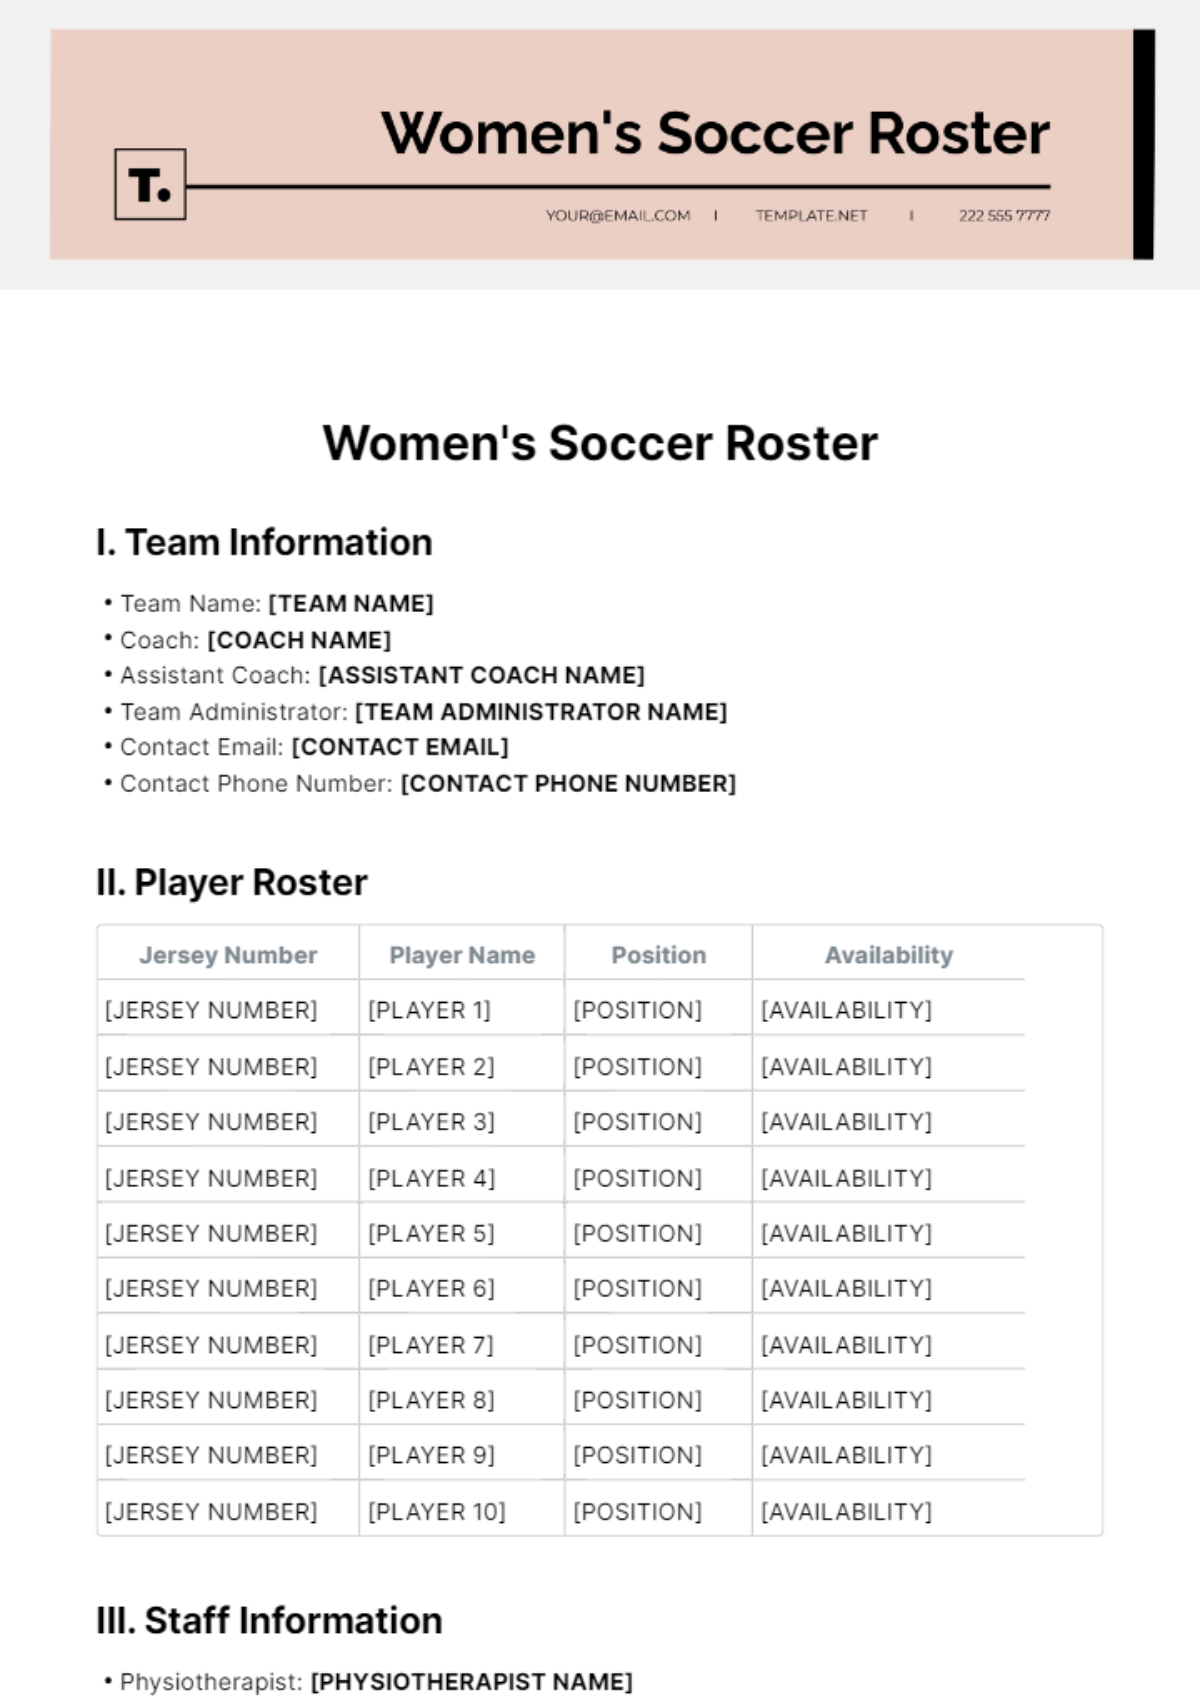 Women’s Soccer Roster Template